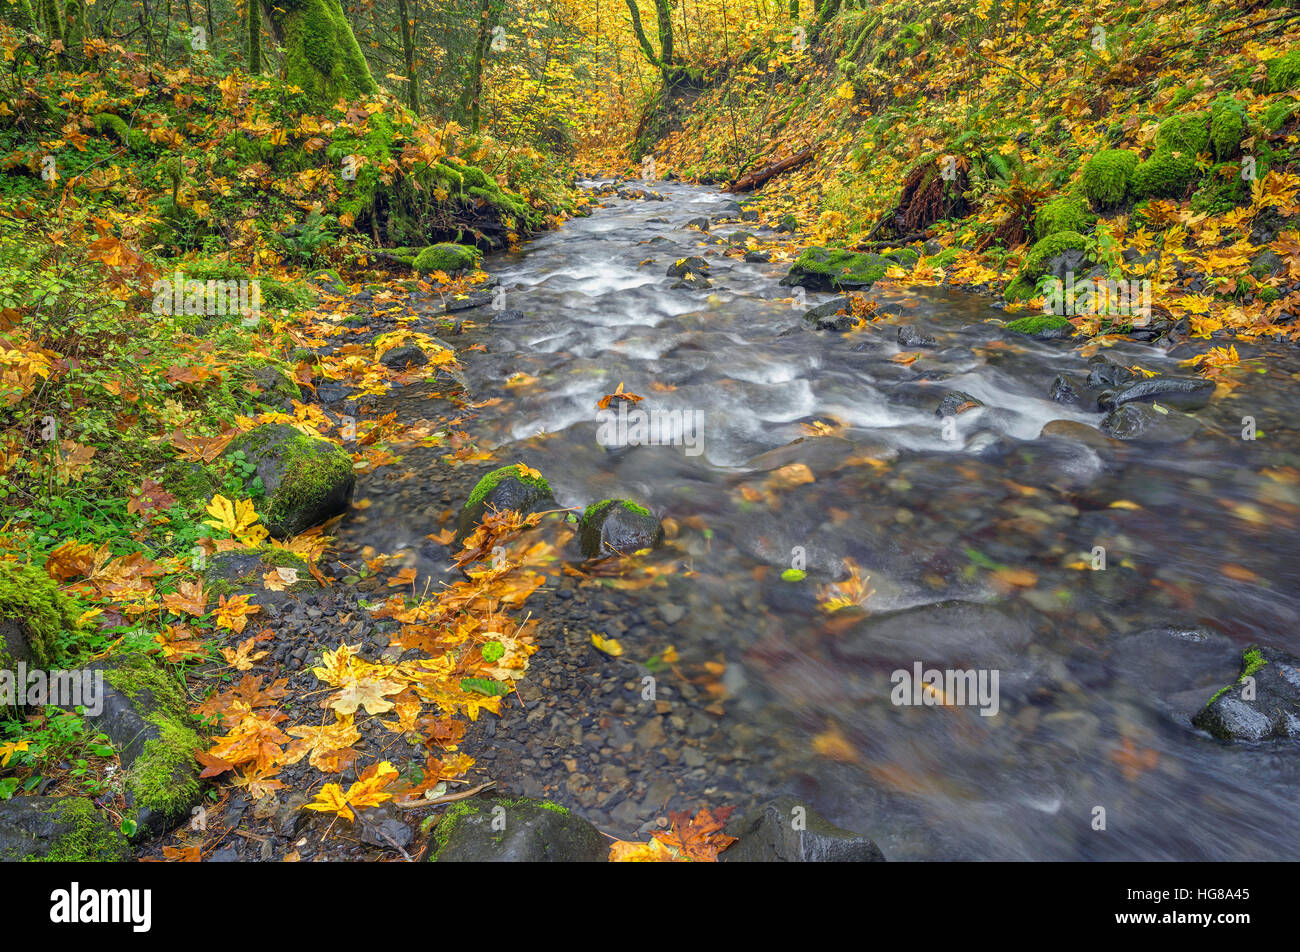 USA, Oregon, Columbia River Gorge National Scenic Area, Fallen leaves of bigleaf maple and forest border Gorton Creek in autumn. Stock Photo